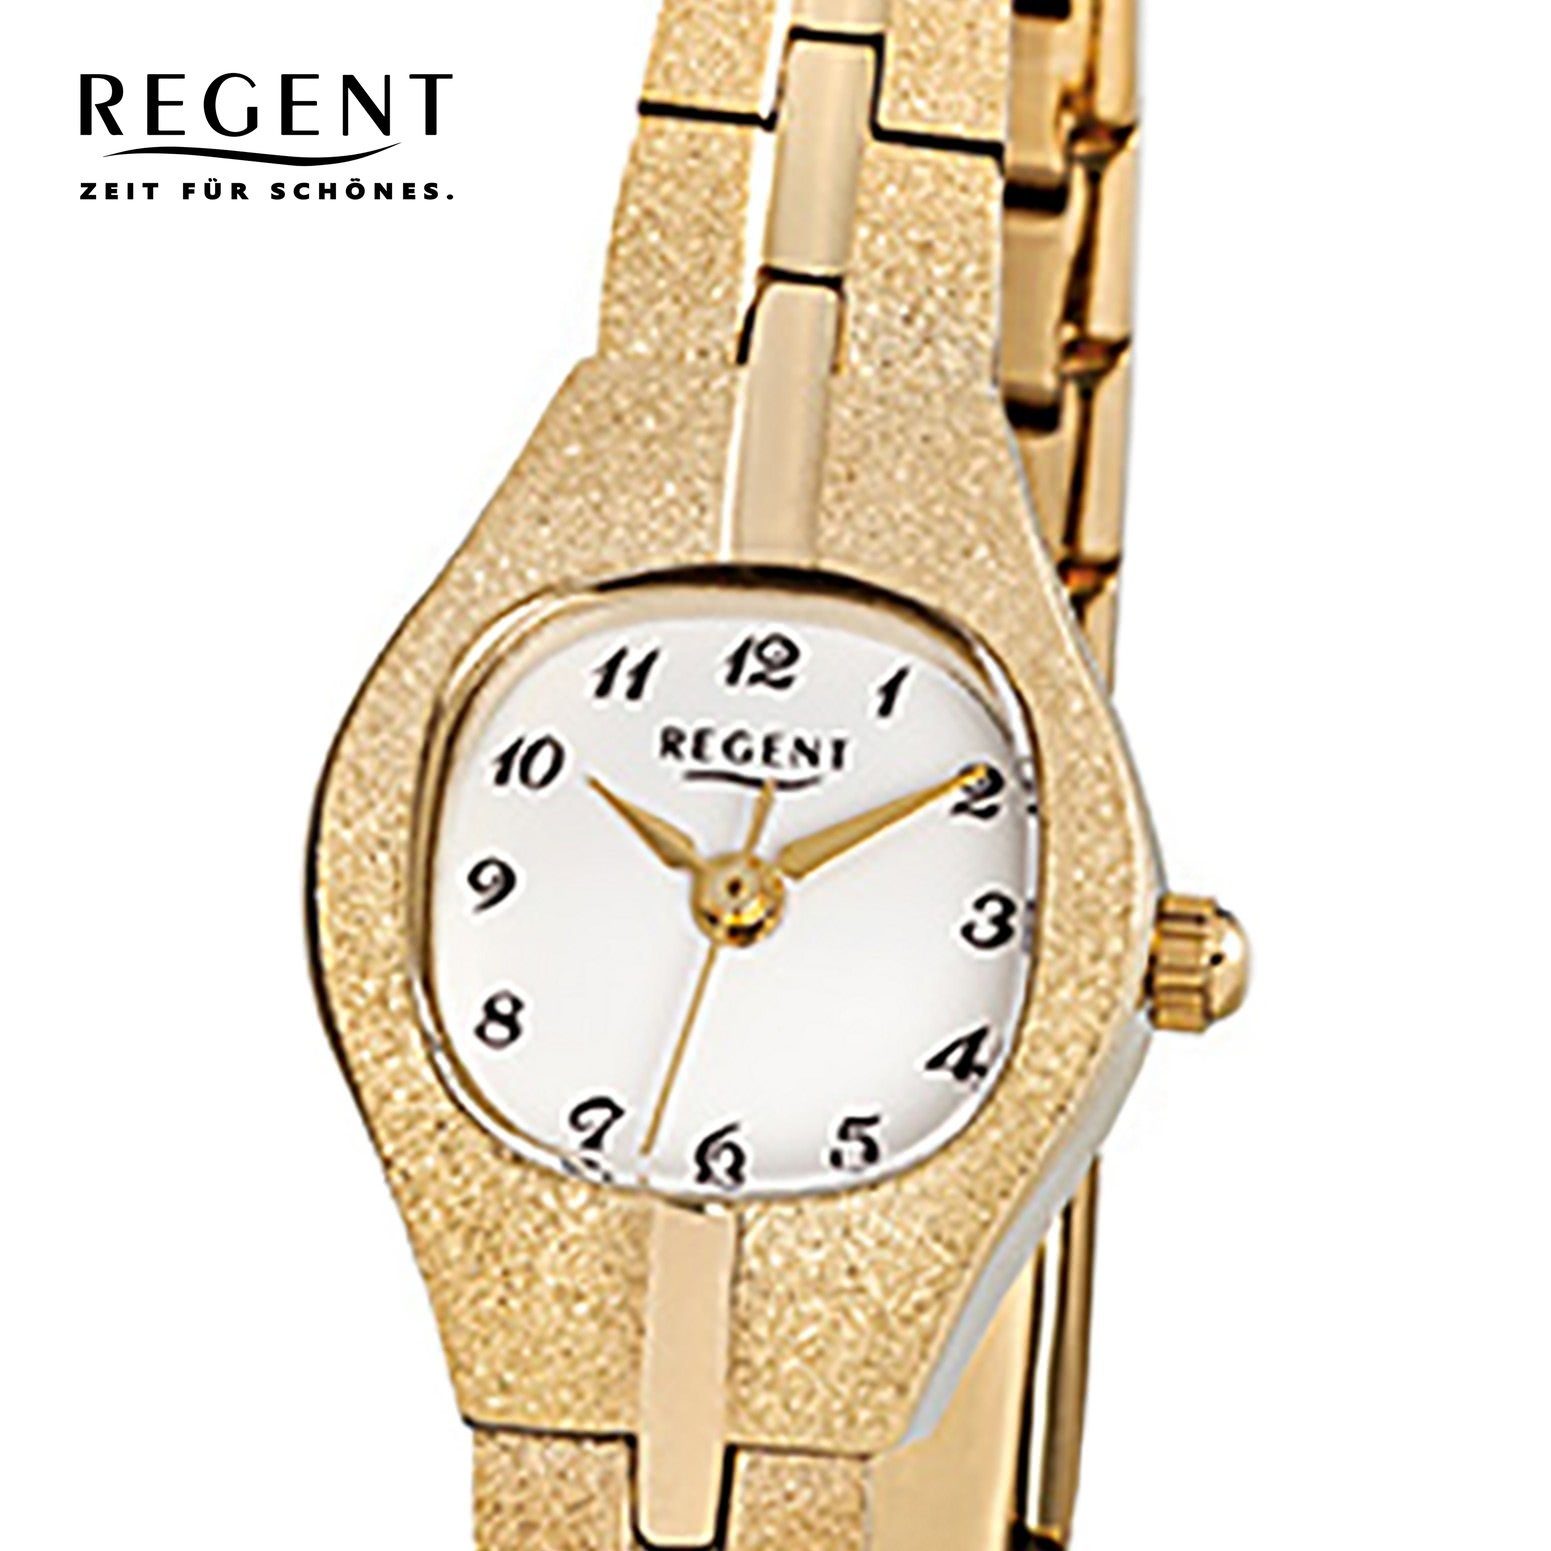 Regent Quarzuhr (ca. Regent Damen-Armbanduhr Analog 18x23mm), F-308, klein Damen Edelstahl, ionenplattiert gold Armbanduhr eckig